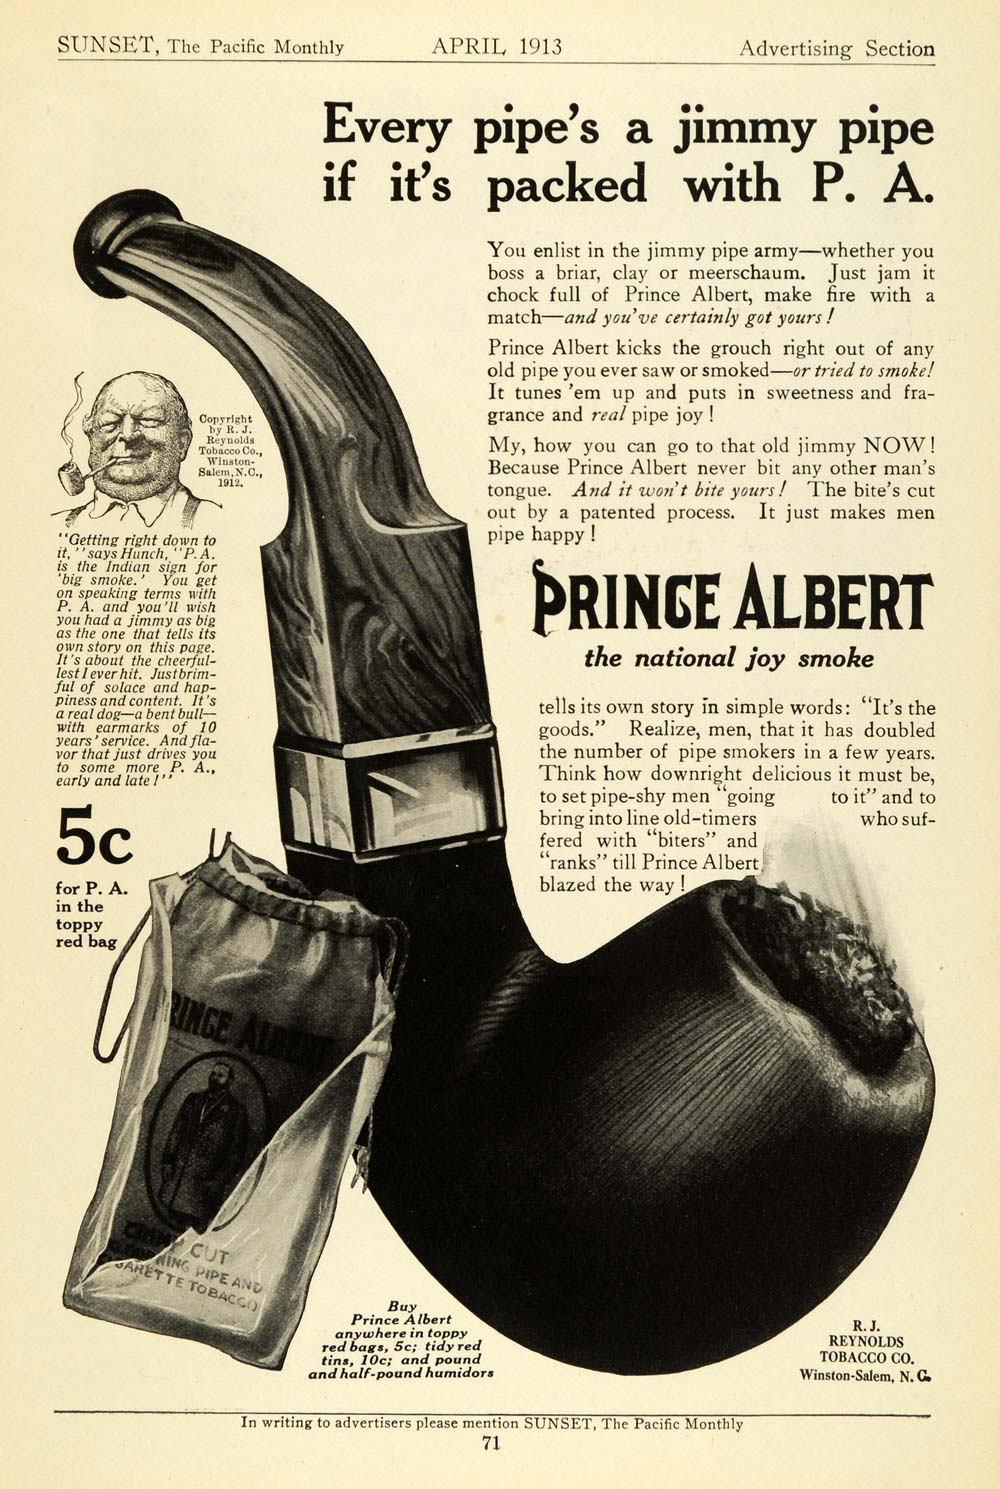 1913 Ad Prince Albert Jimmy Pipe Crimp Cut Tobacco R.J. Reynolds Pricing PM3